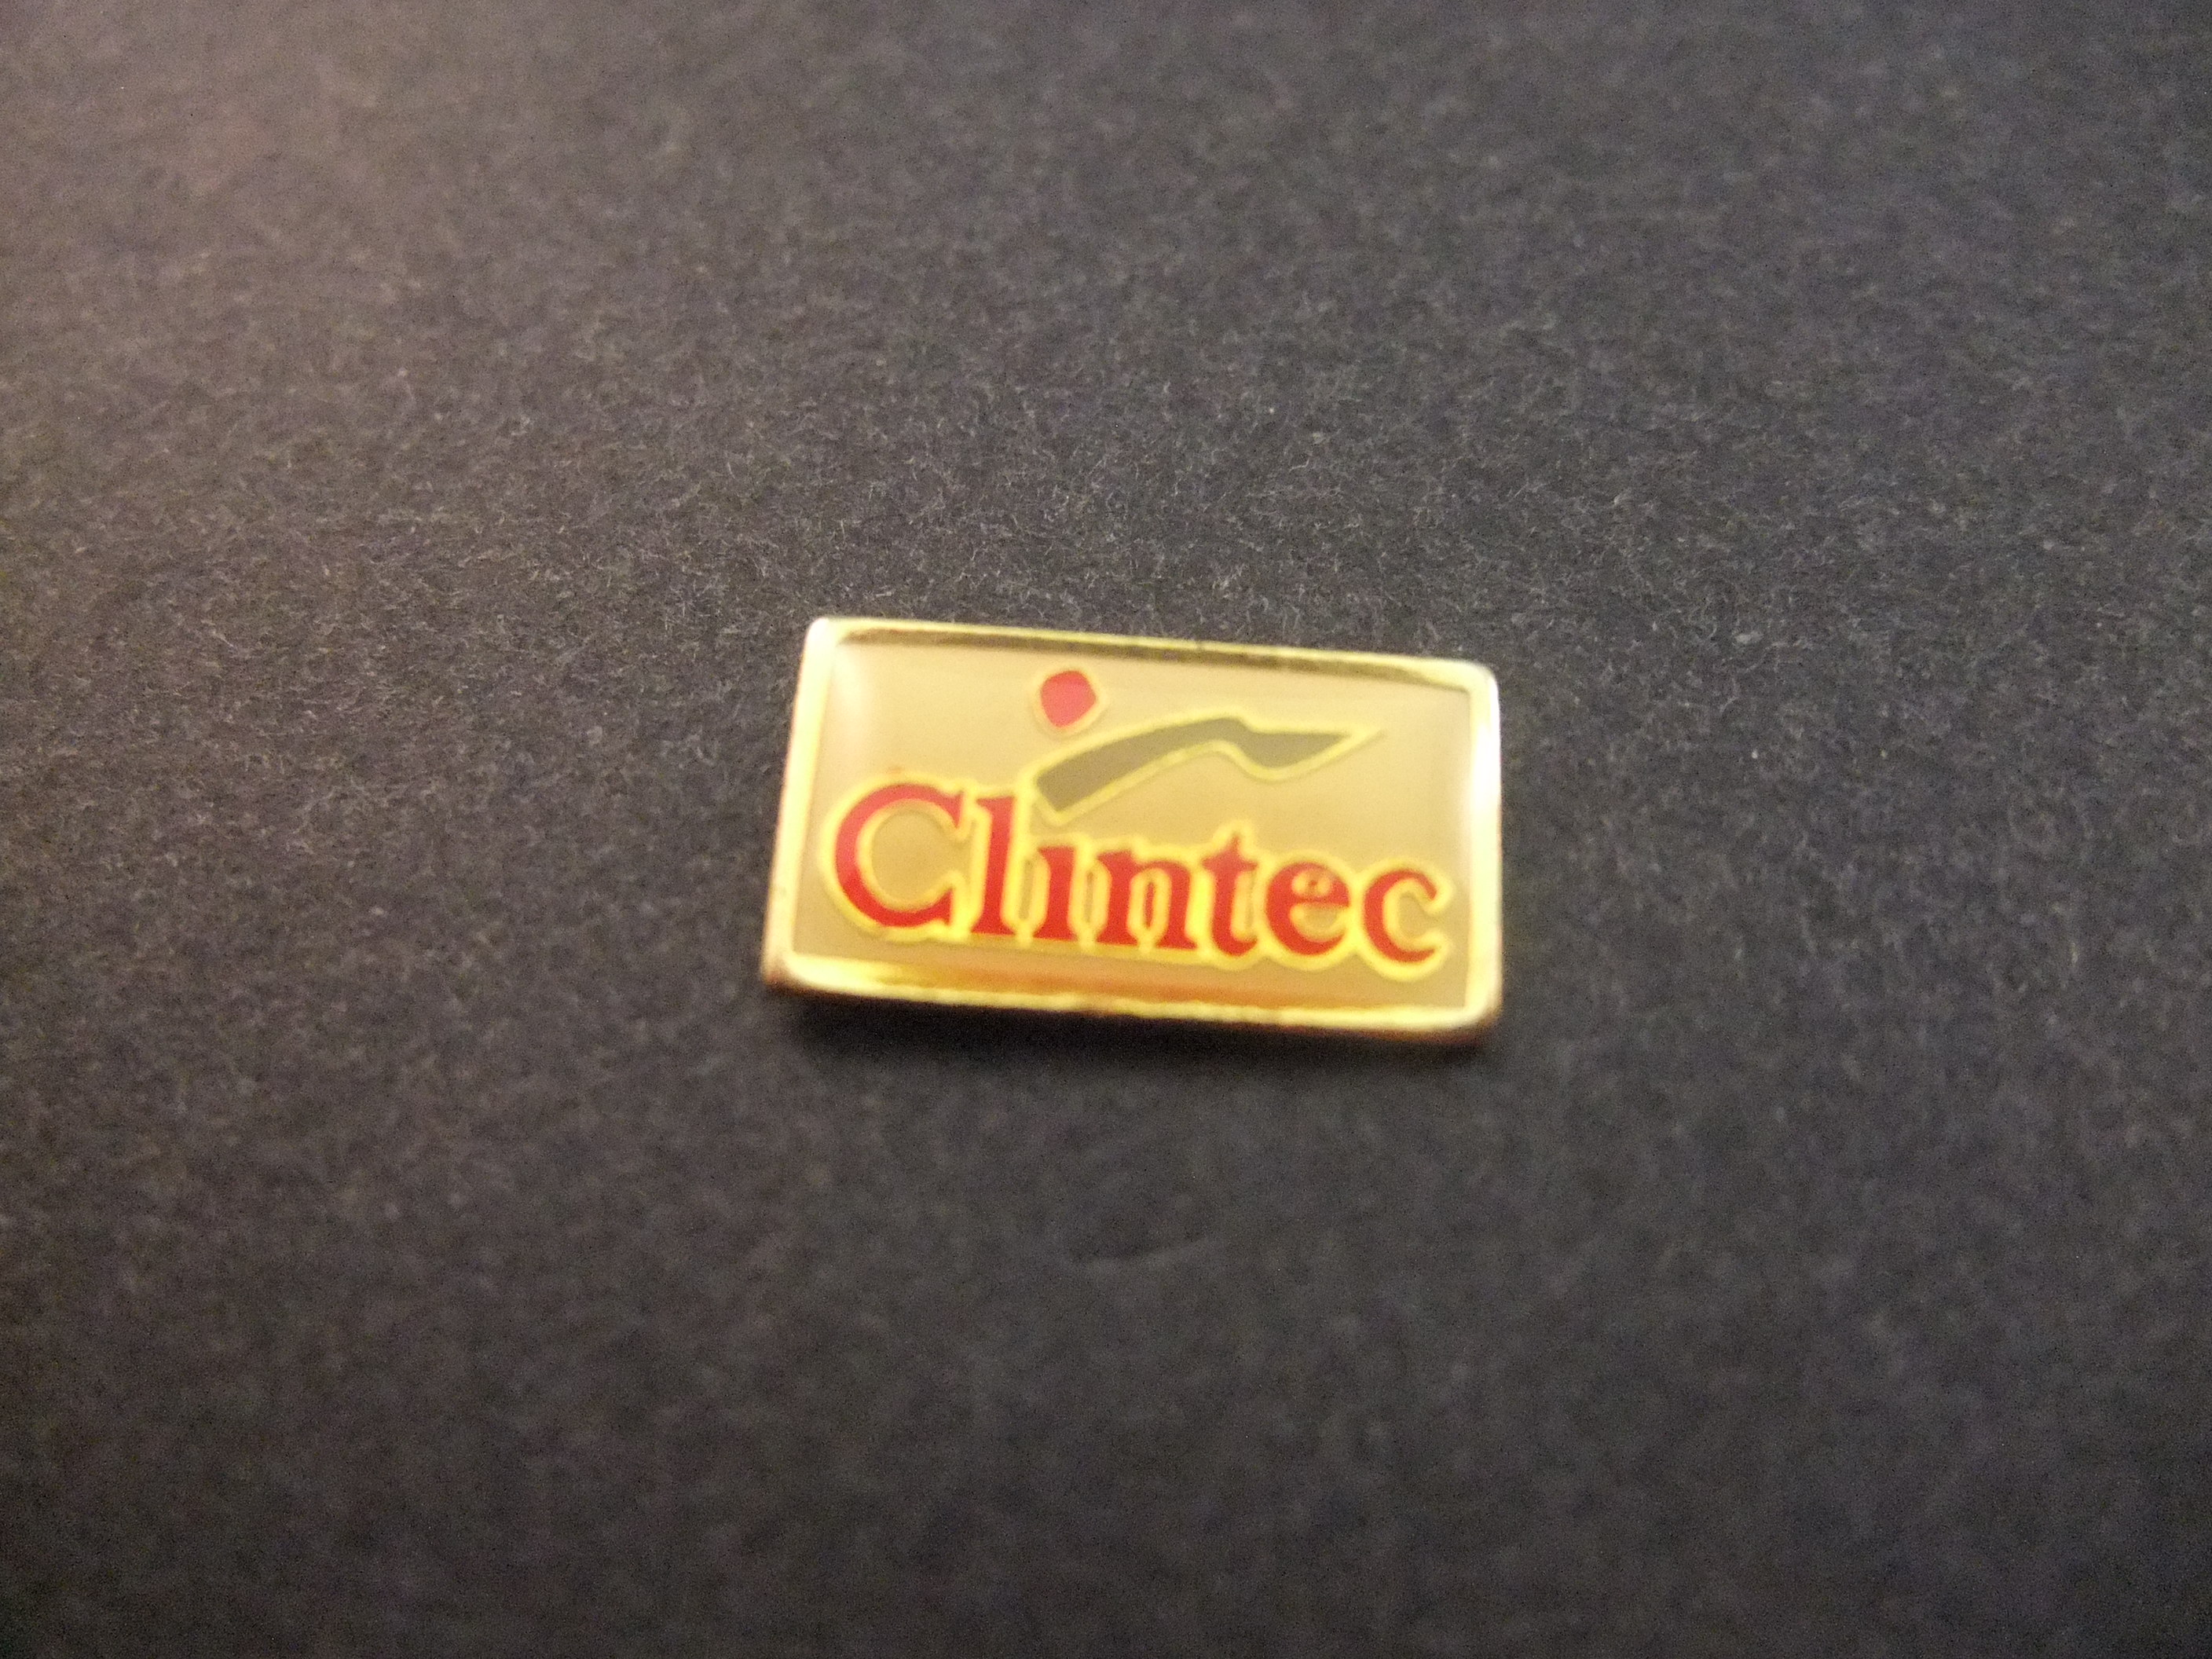 Clintec pharmacie logo